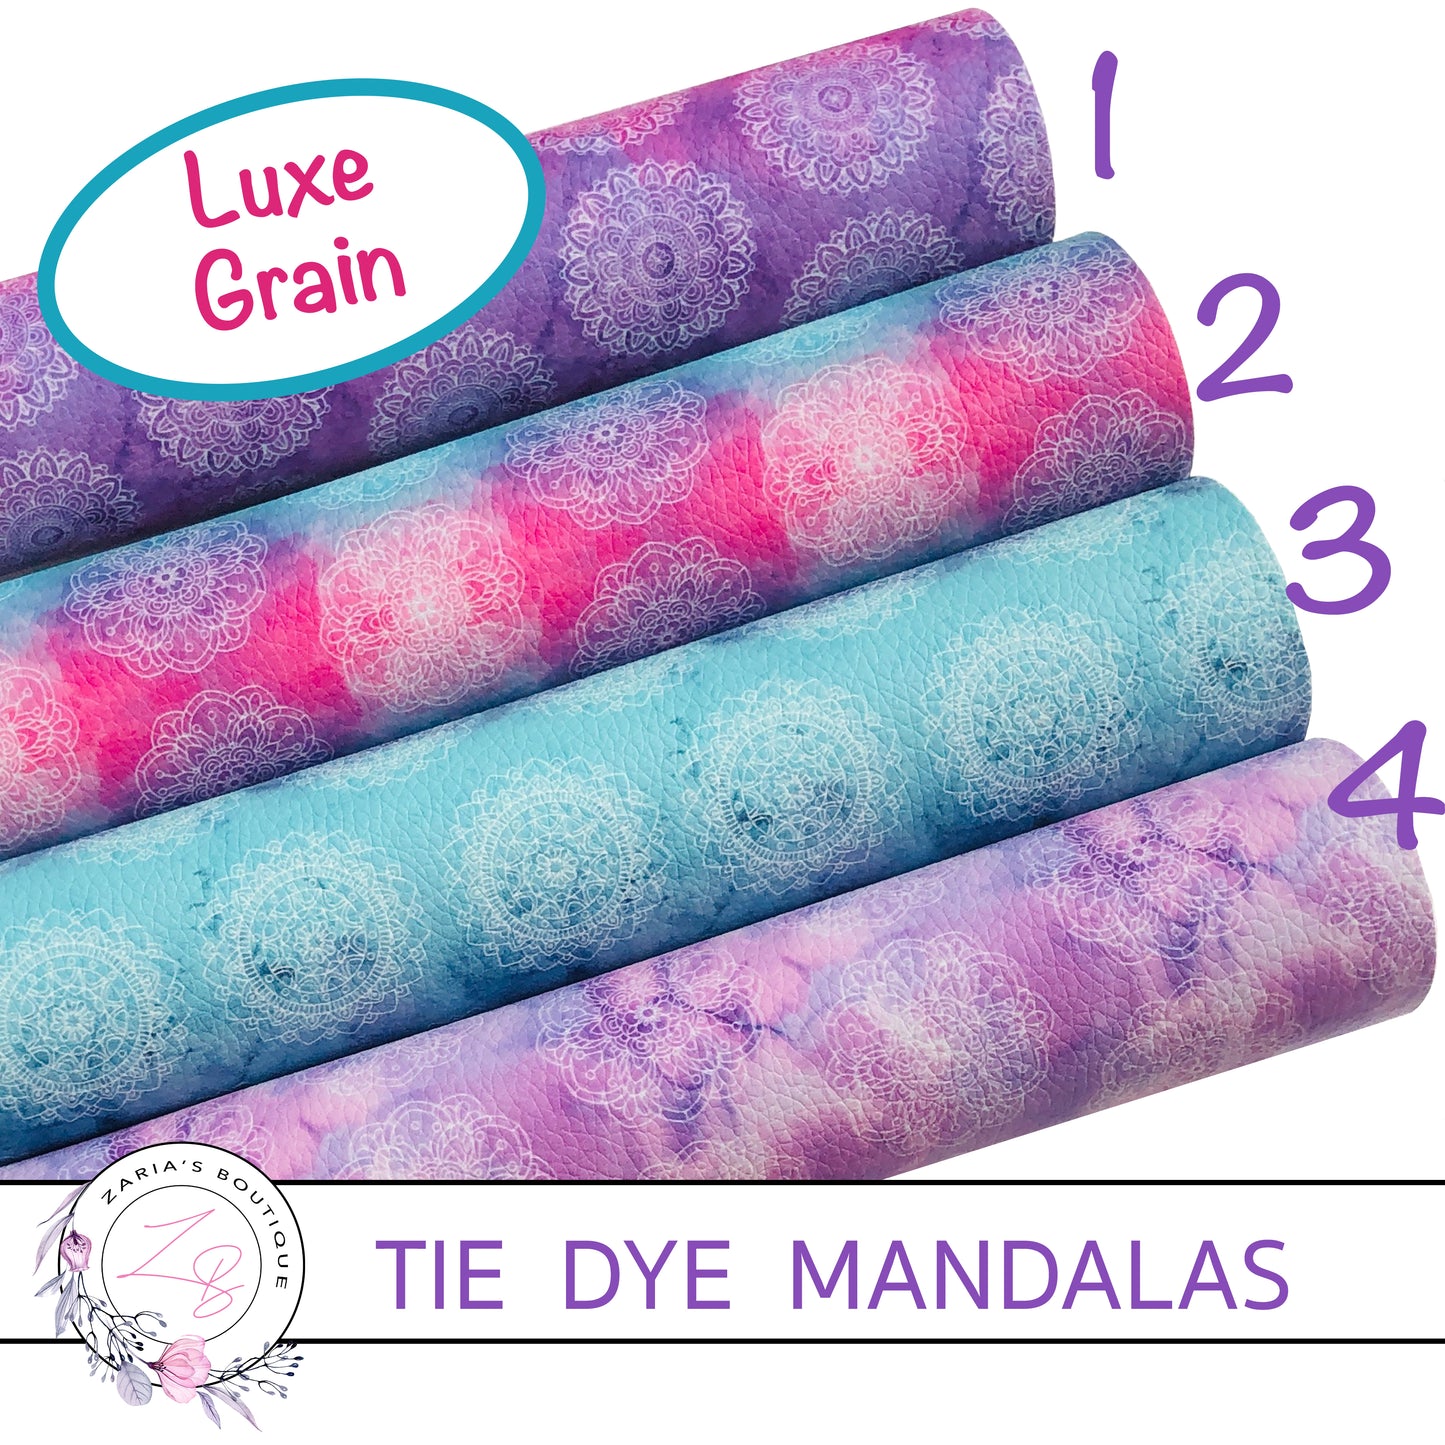 Tie Dye Mandalas • Pinks • Blues • Purples • Luxe Grain Vegan Faux Leather